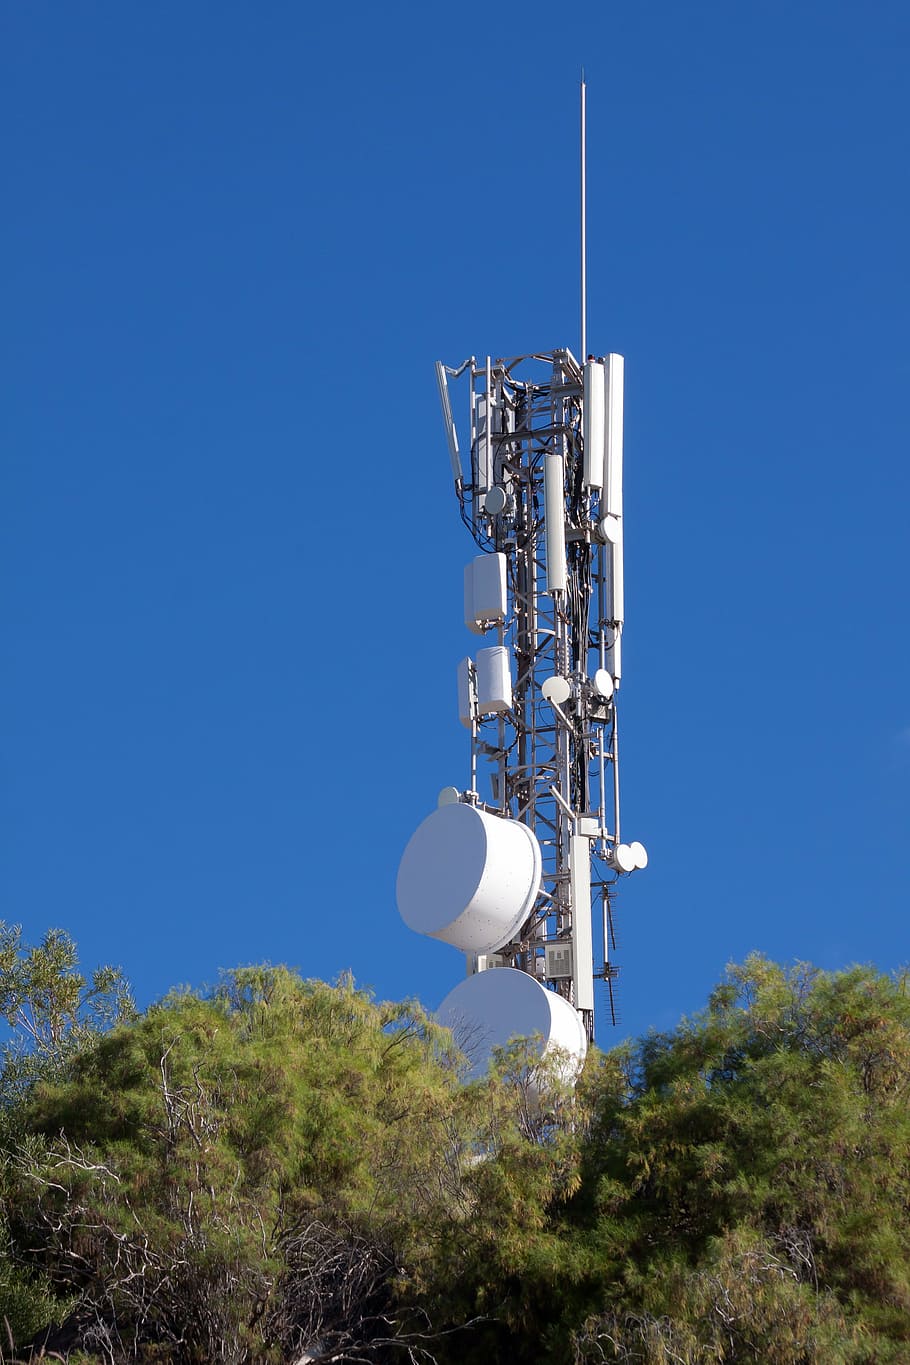 tiang telekomunikasi, tiang radio, komunikasi, antena, penerimaan, berita, langit, biru, relay radio, jaringan seluler